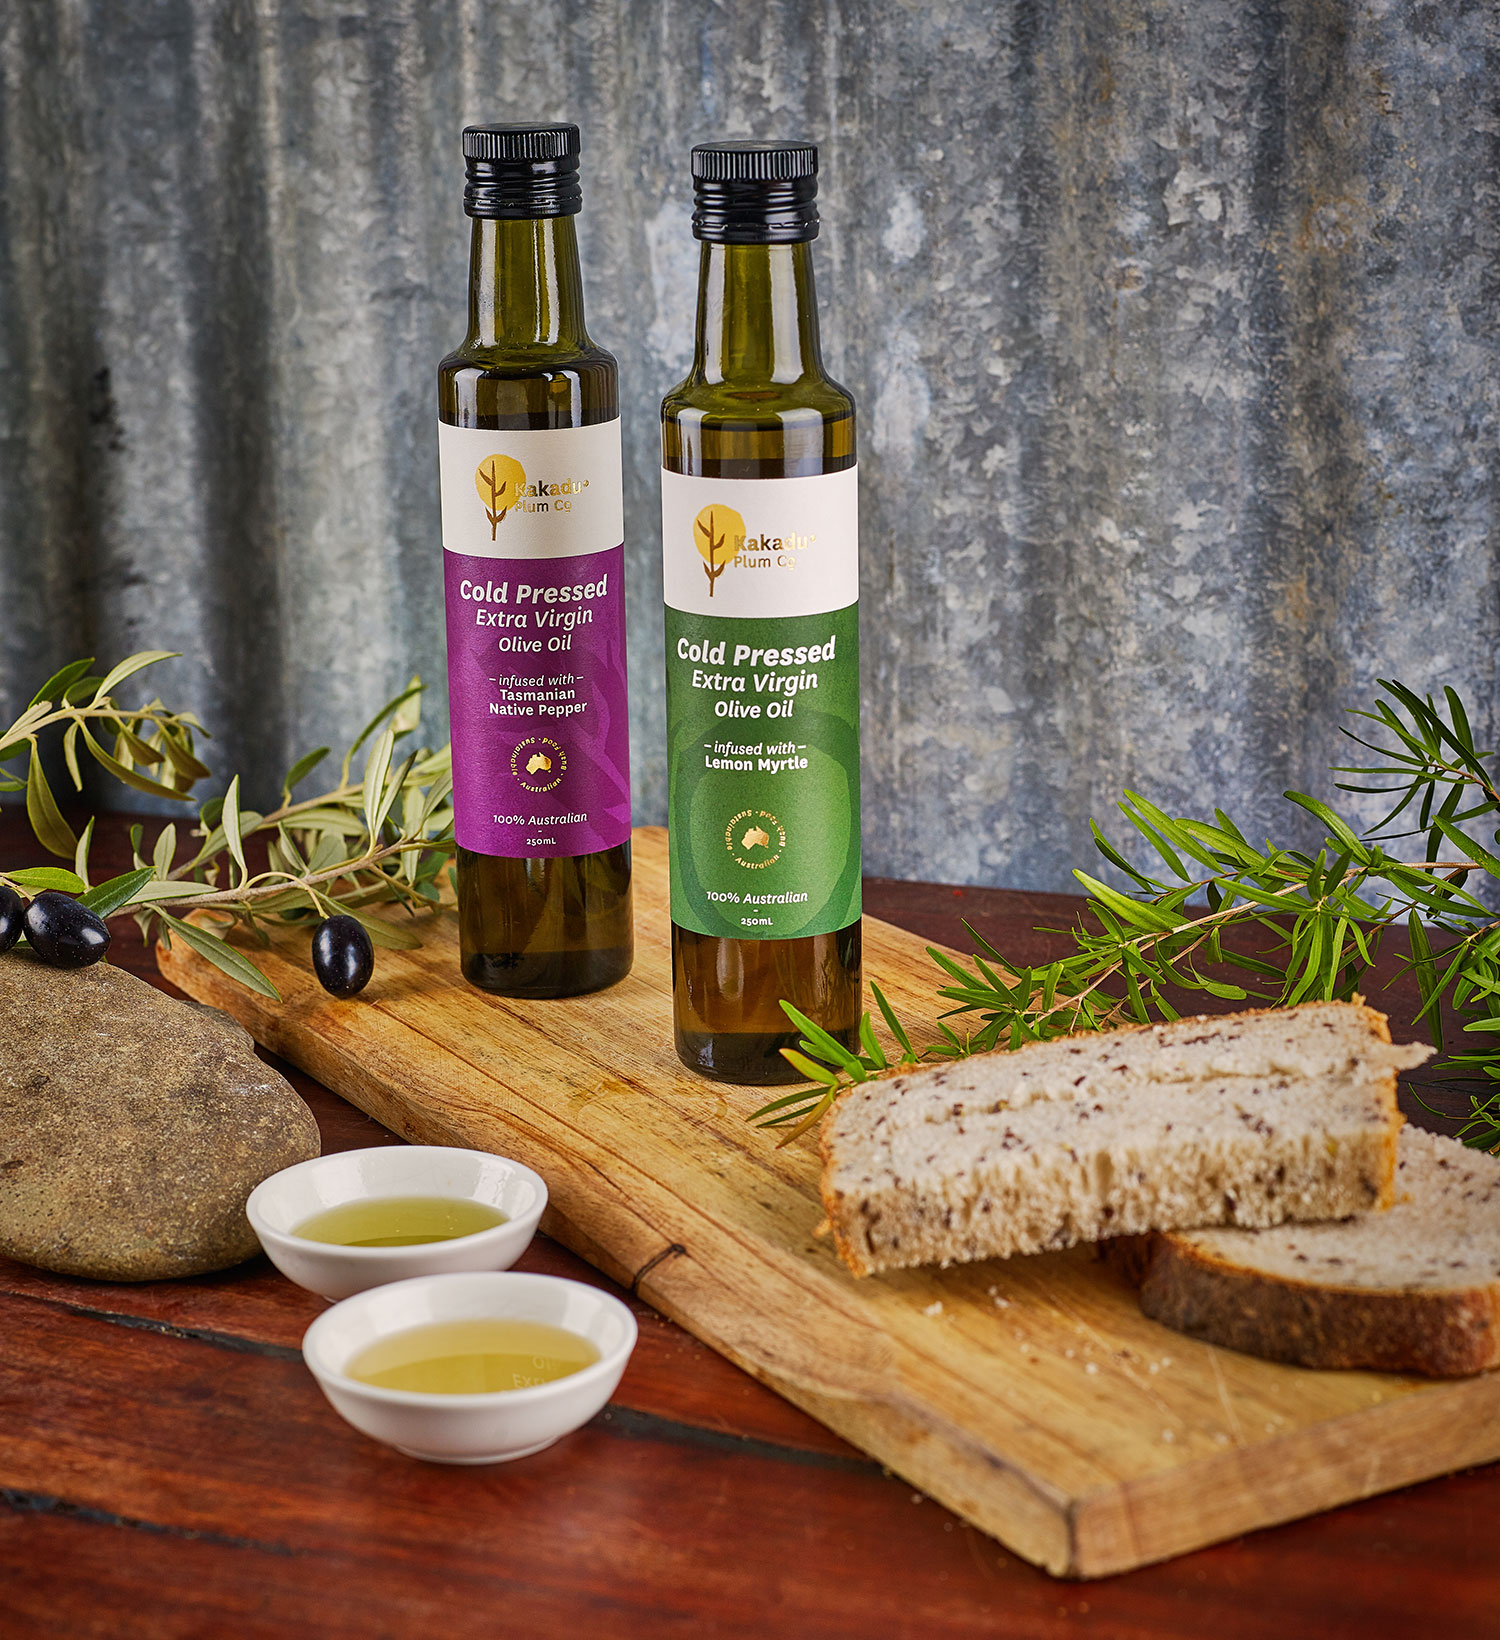 Kakadu Plum Co. 100% Australian cold-pressed extra virgin olive oils with two distinct native Australian flavours: lemon myrtle and native Tasmanian pepper